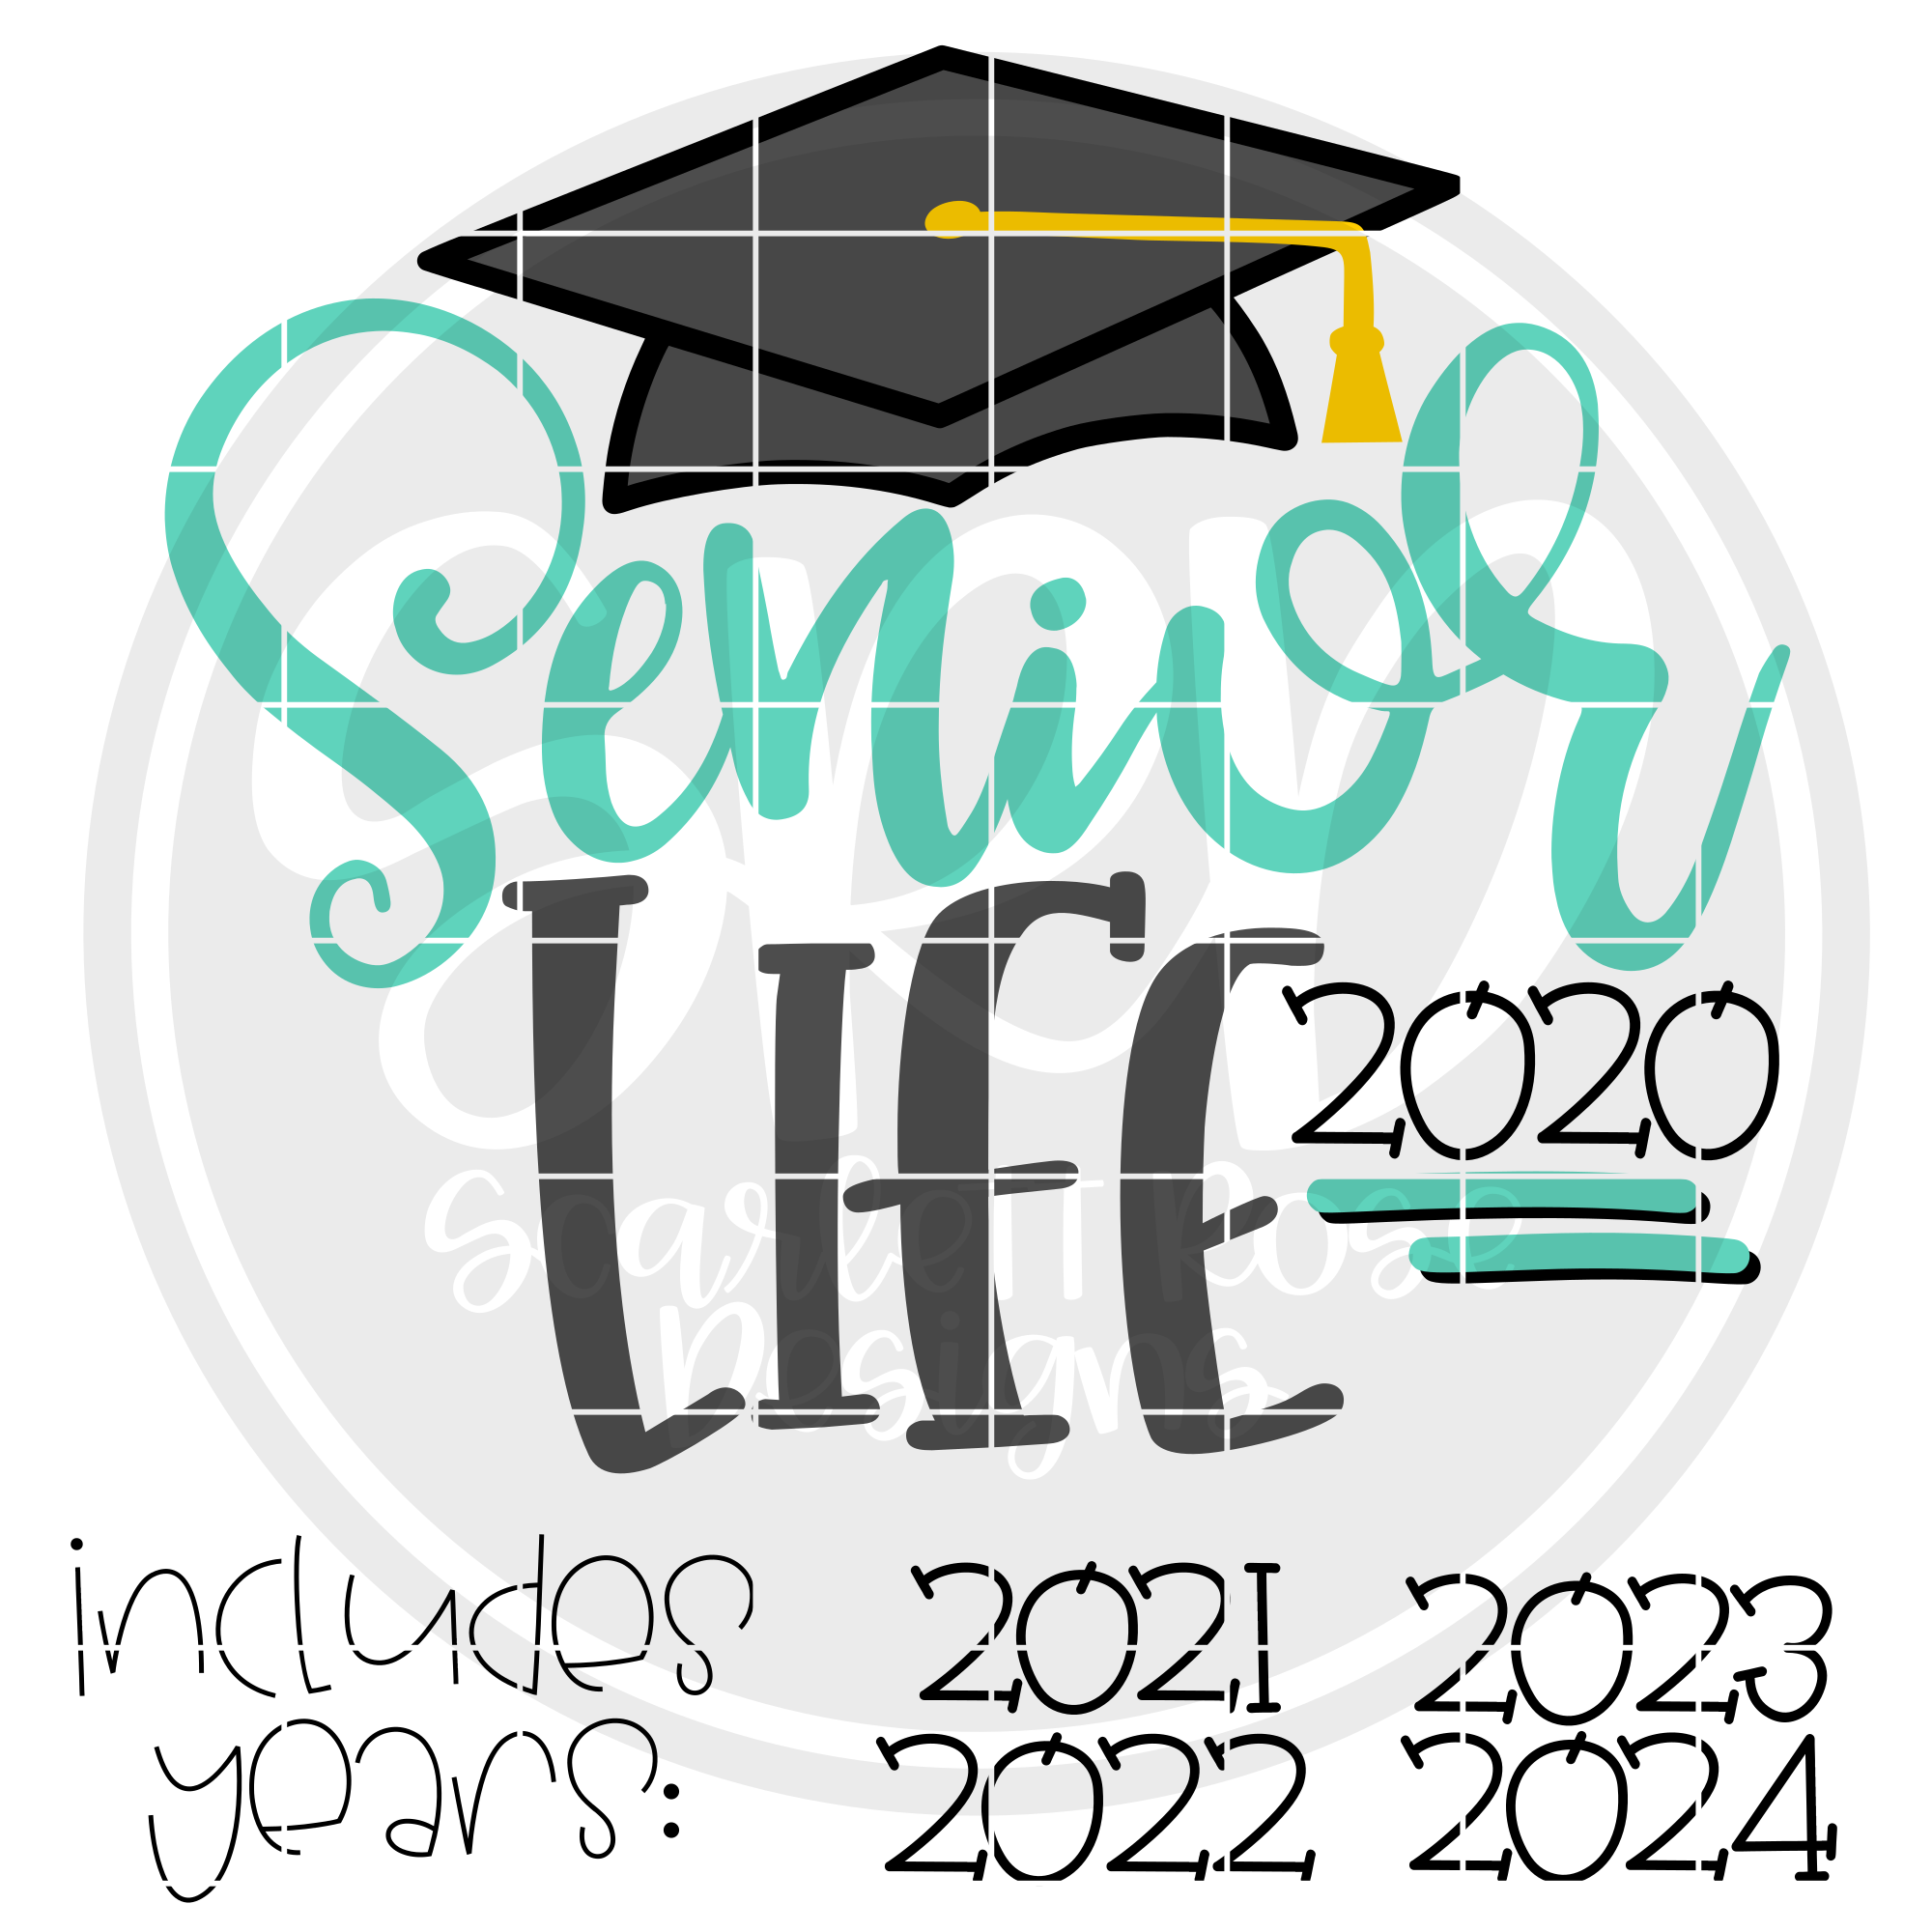 School Svg Senior Life 2020 Svg Graduation Cap Svg Cut File